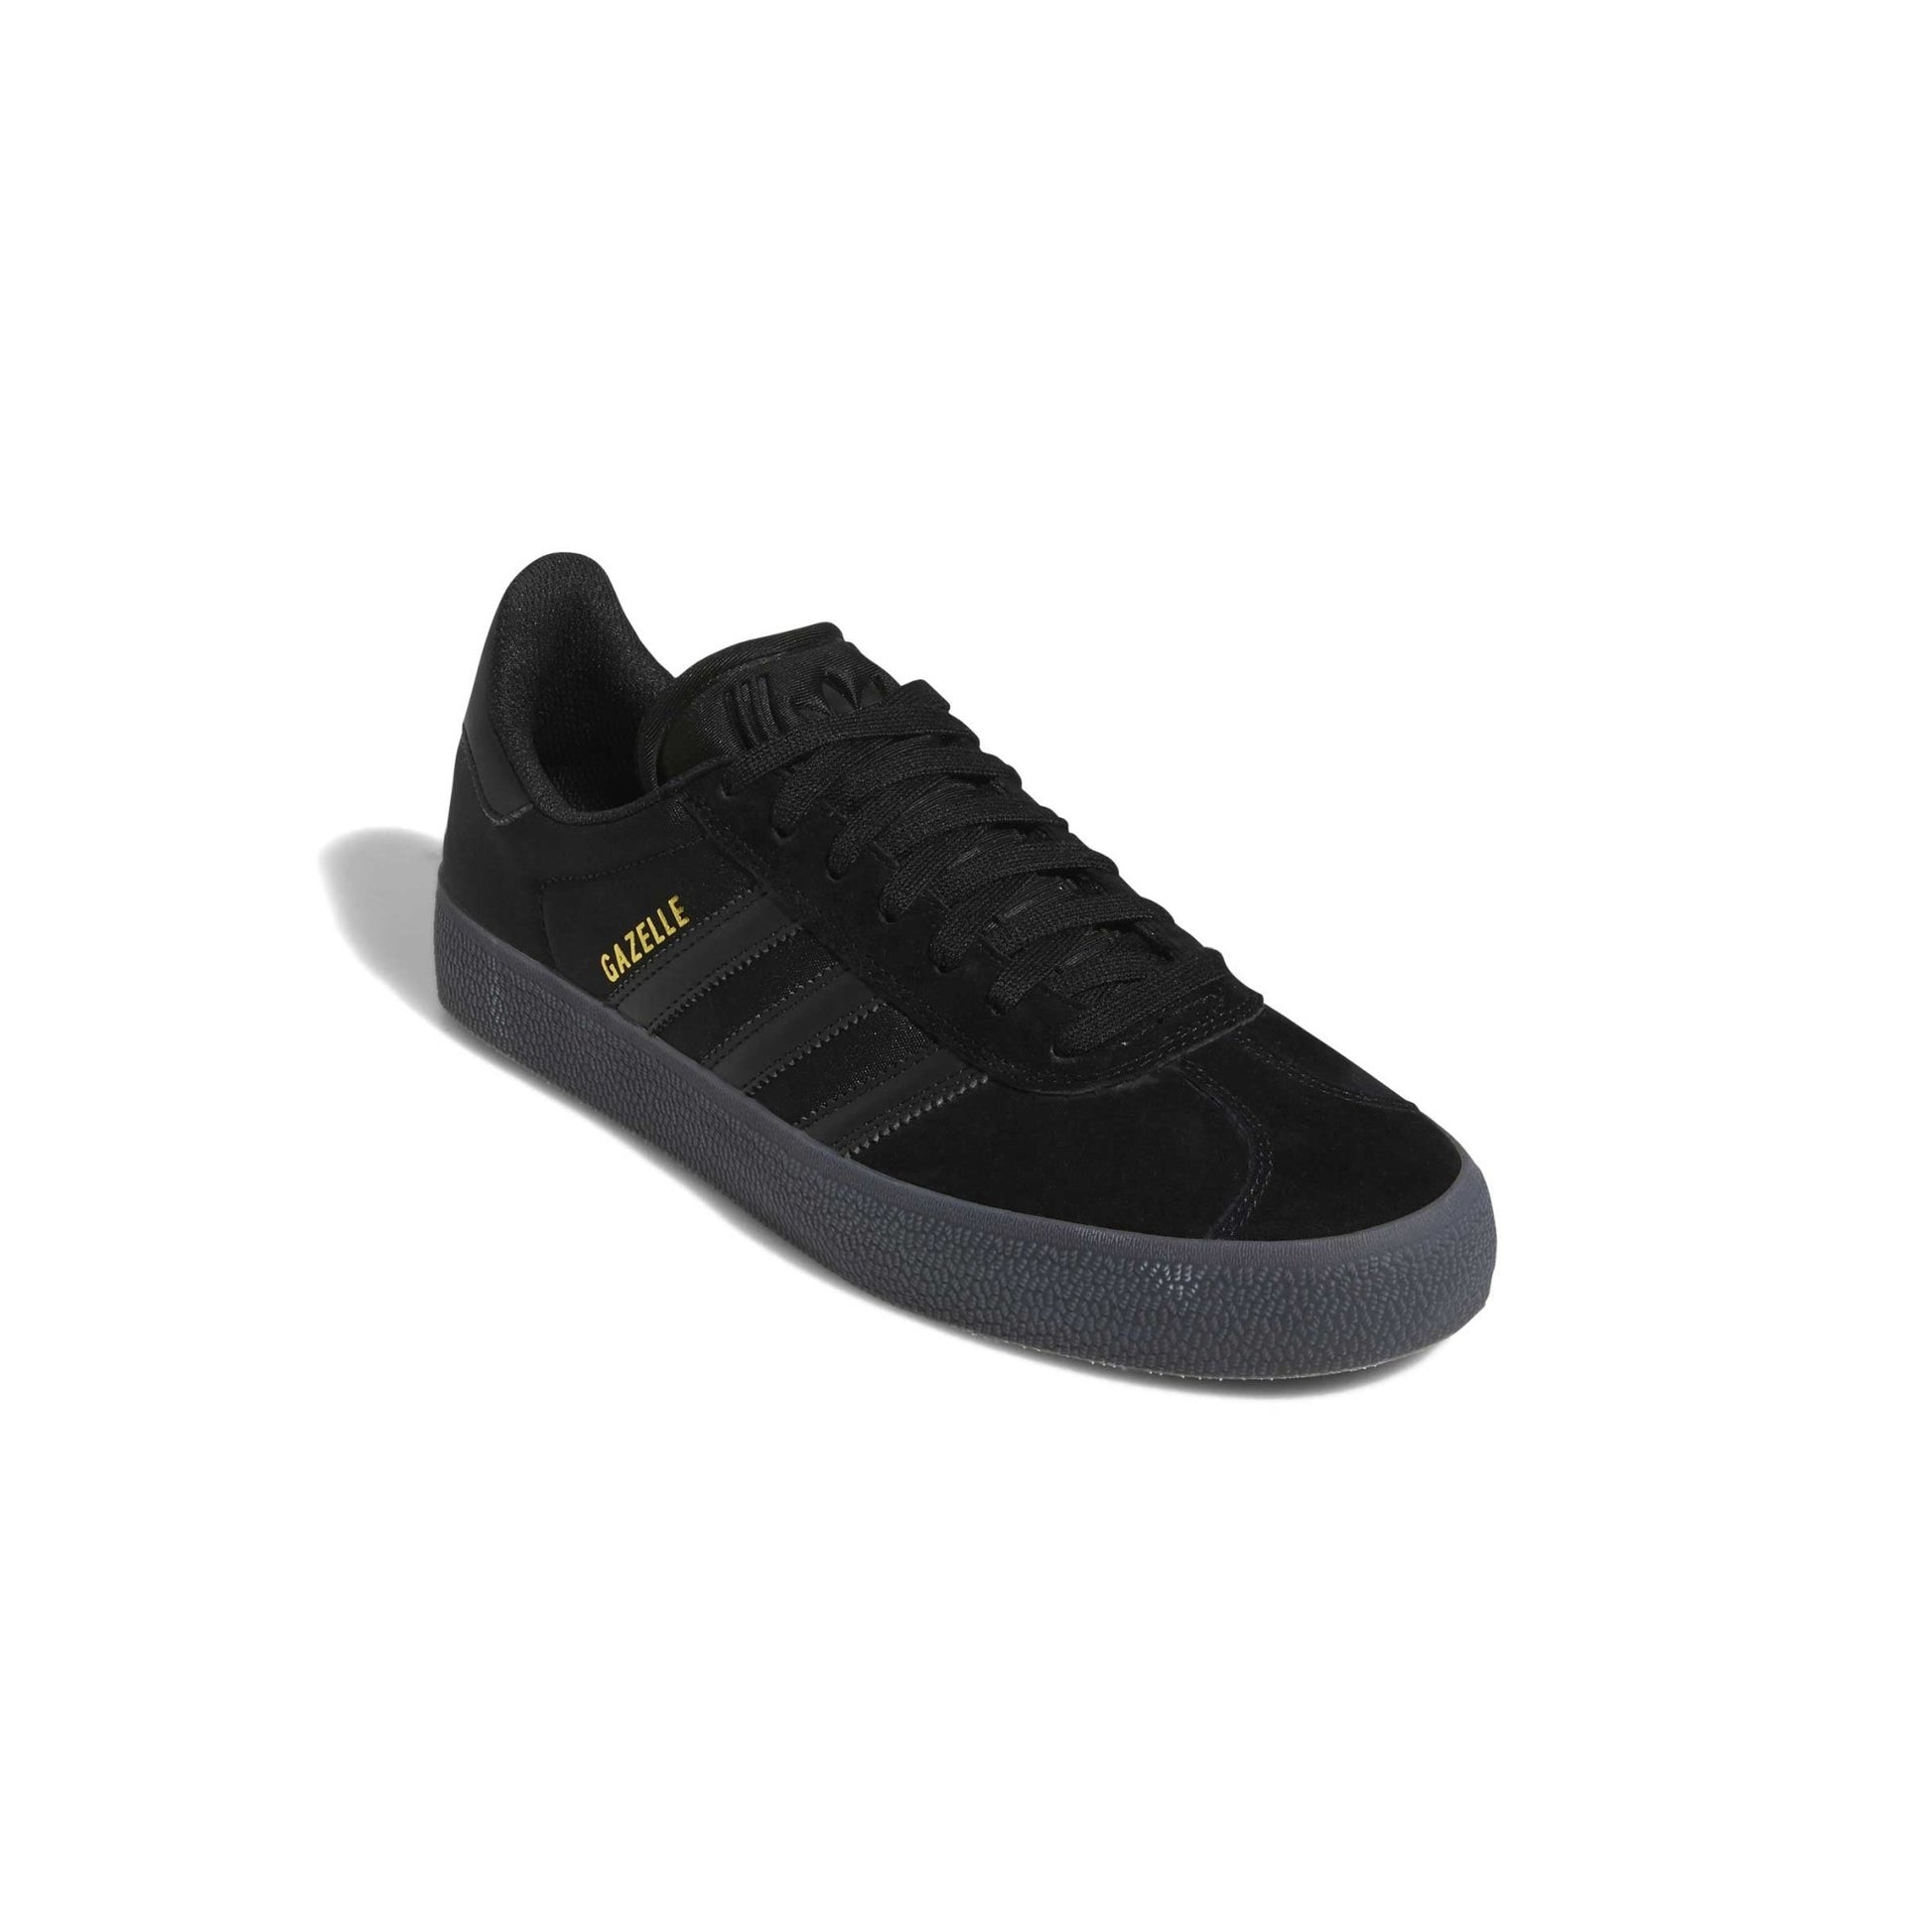 Adidas Gazelle ADV, core black / core black / gold metallic - Tiki Room Skateboards - 7